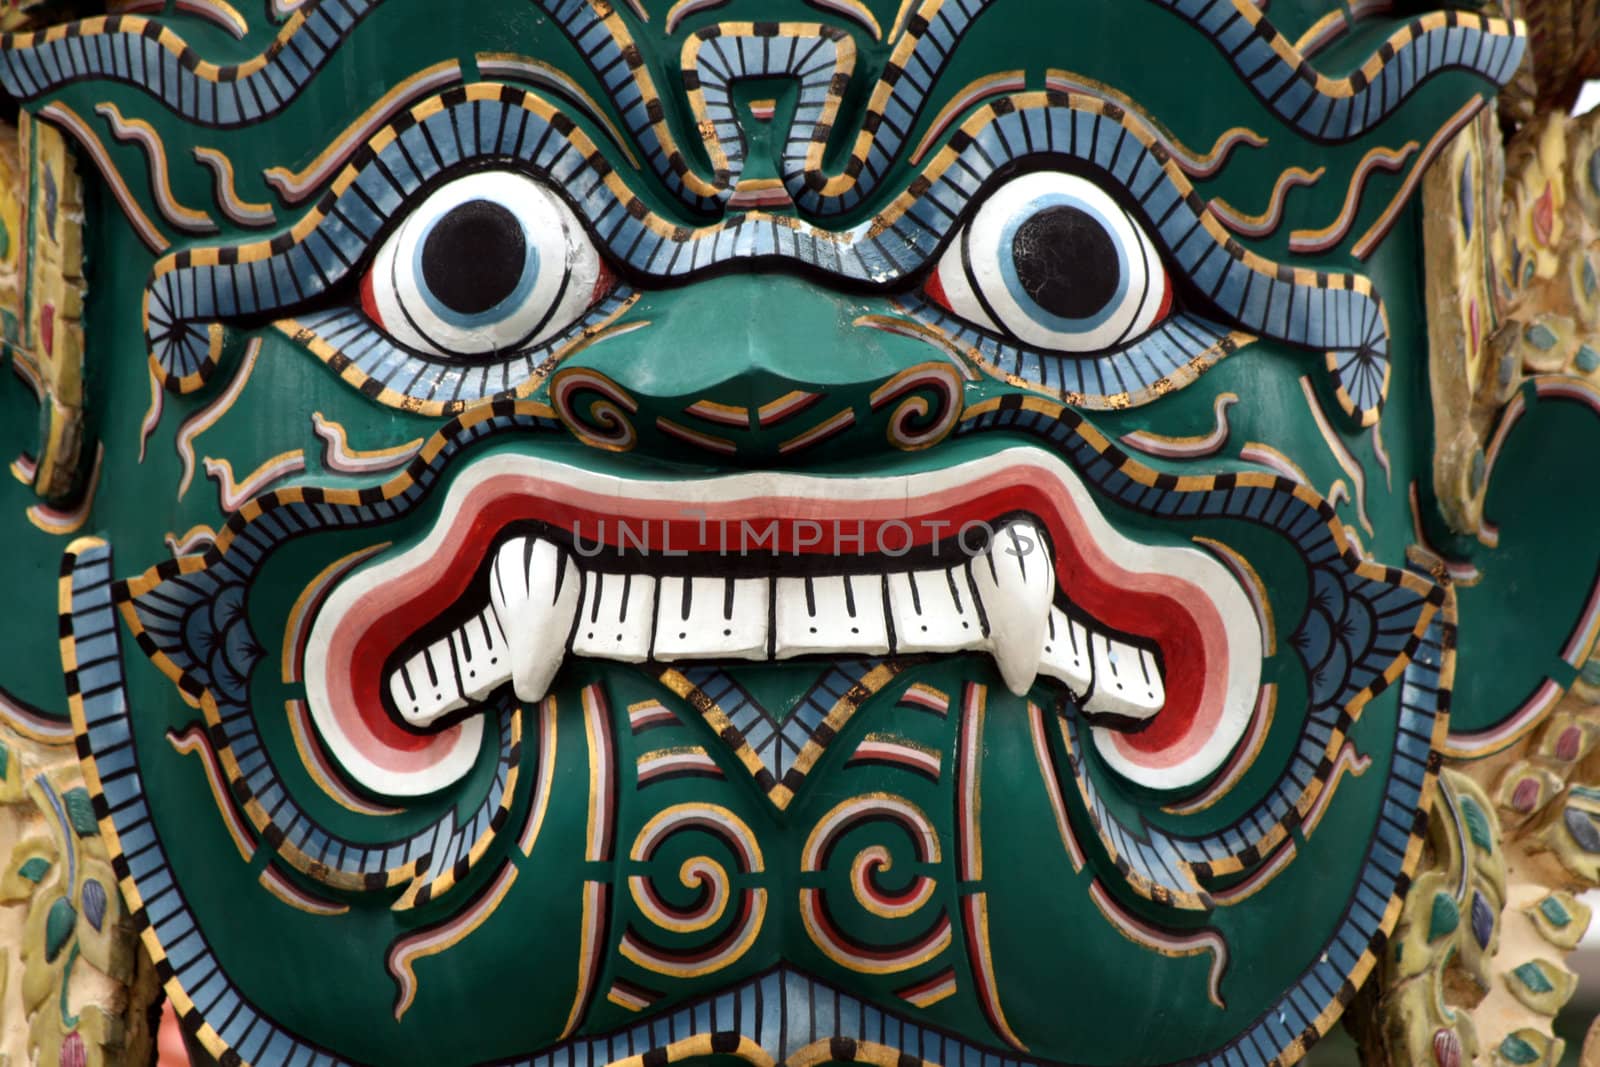 temple guardian in bangkok by taboga